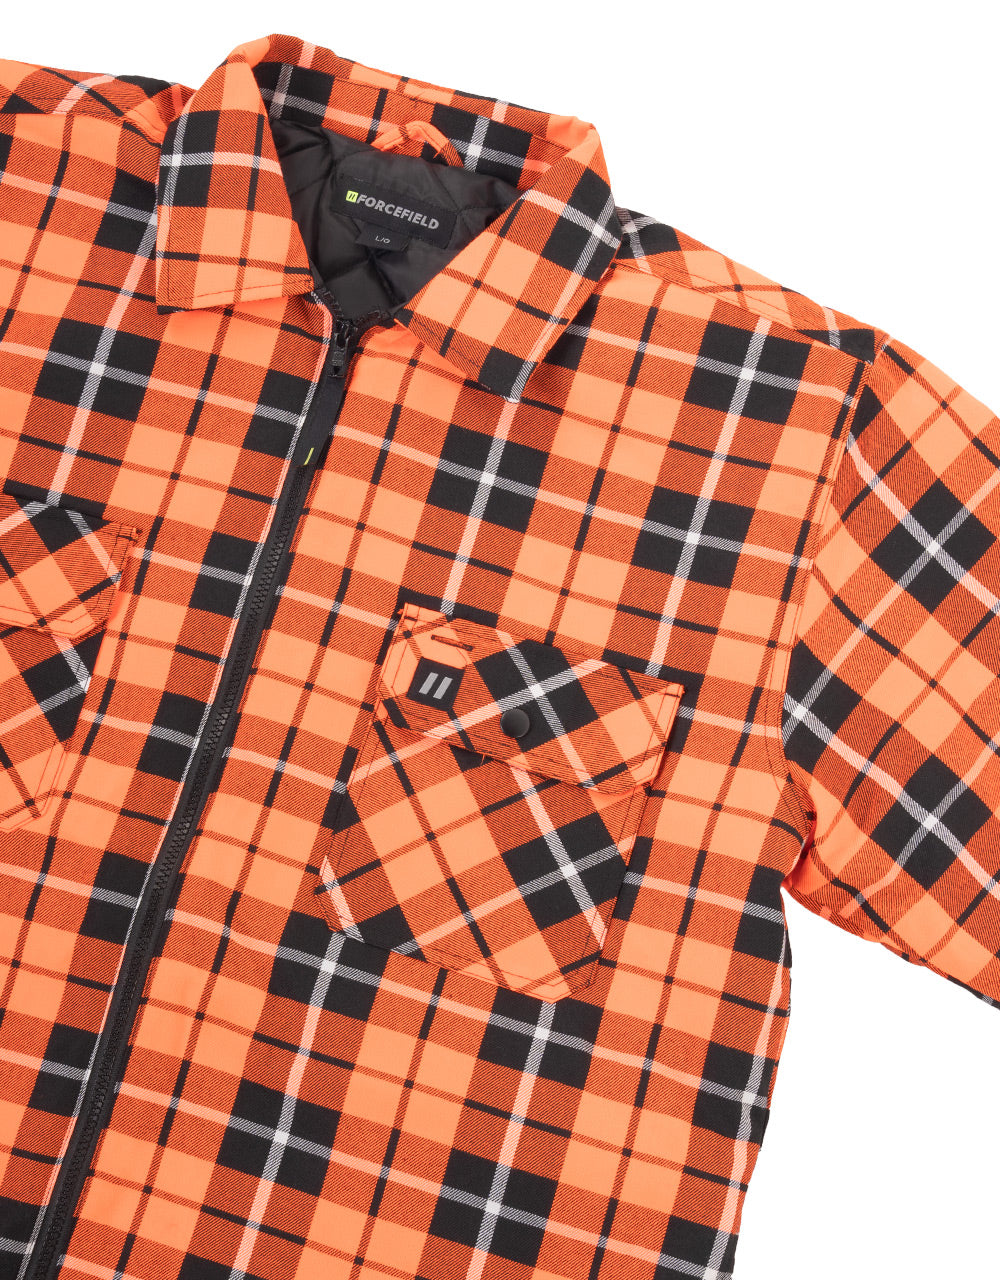 Hi Vis Orange Shadow Plaid Quilted Flannel Shirt Jacket